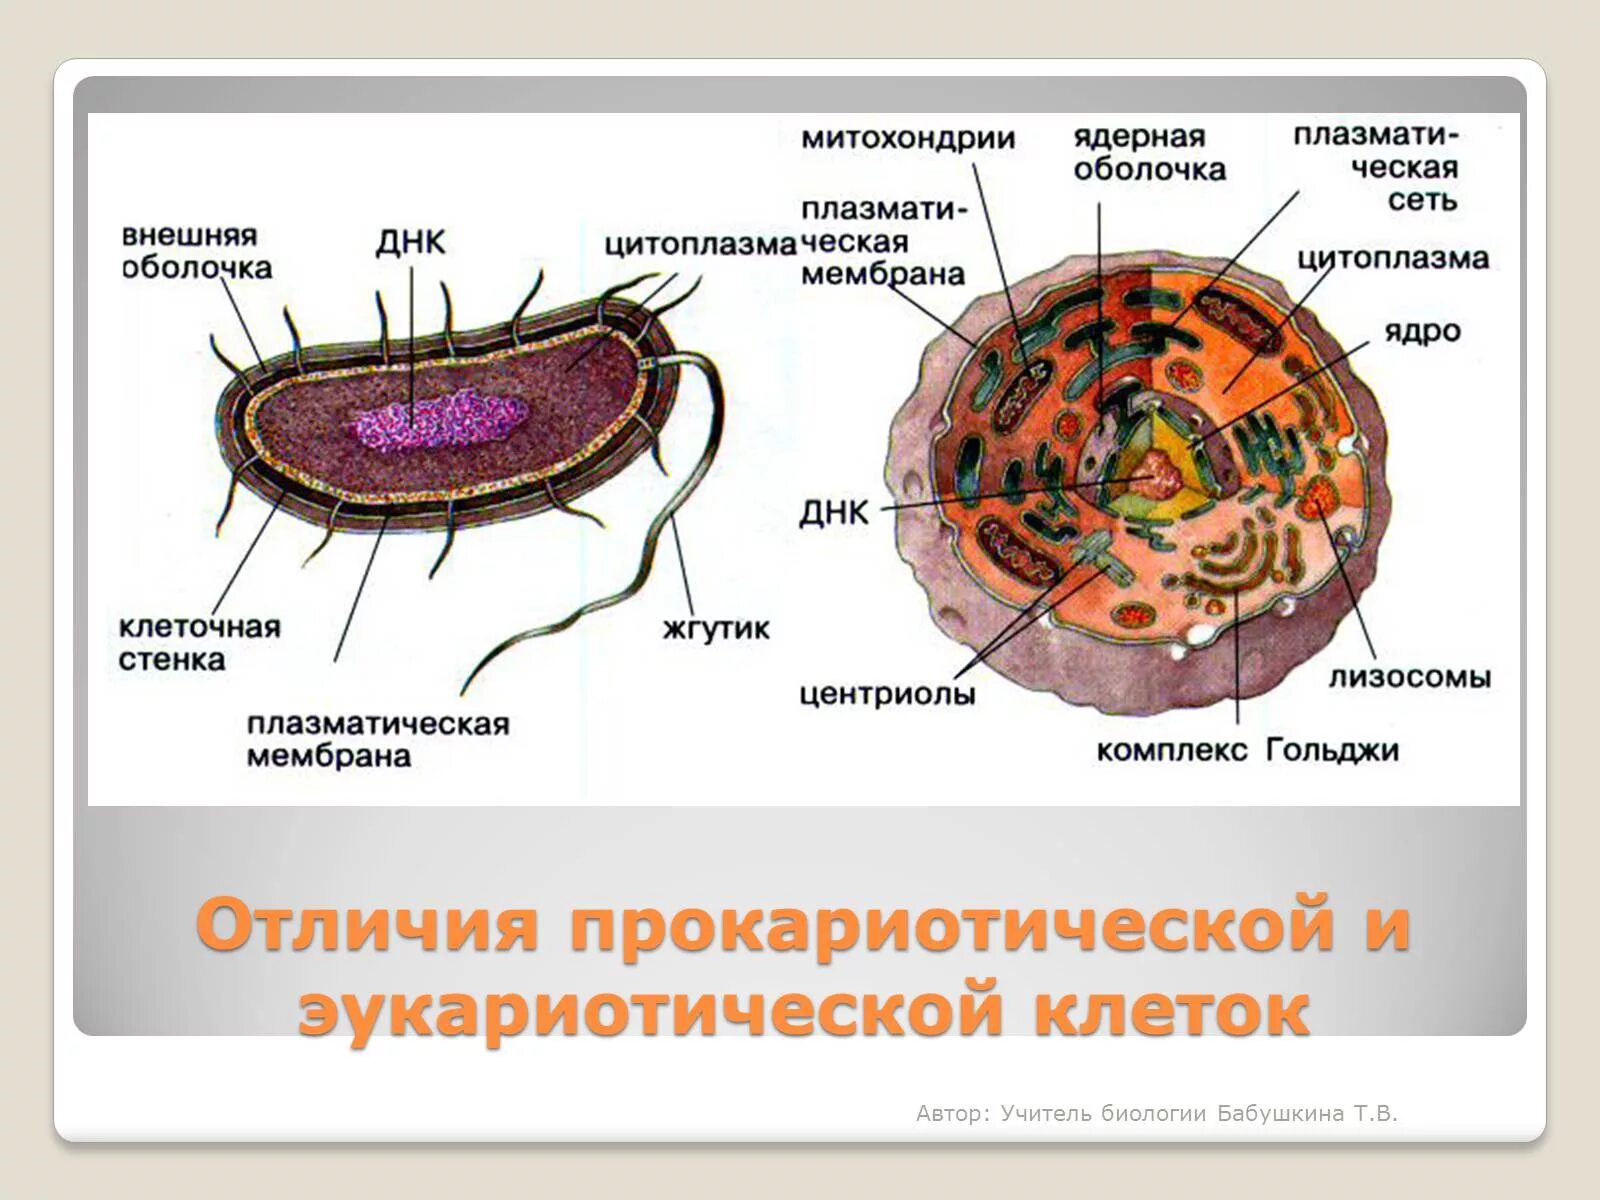 Строение бактерии прокариот. Строение бактериальной клетки прокариот. Прокариотическая клетка bacteria. Строение клетки прокариот бактерии. В клетках бактерий есть ядро